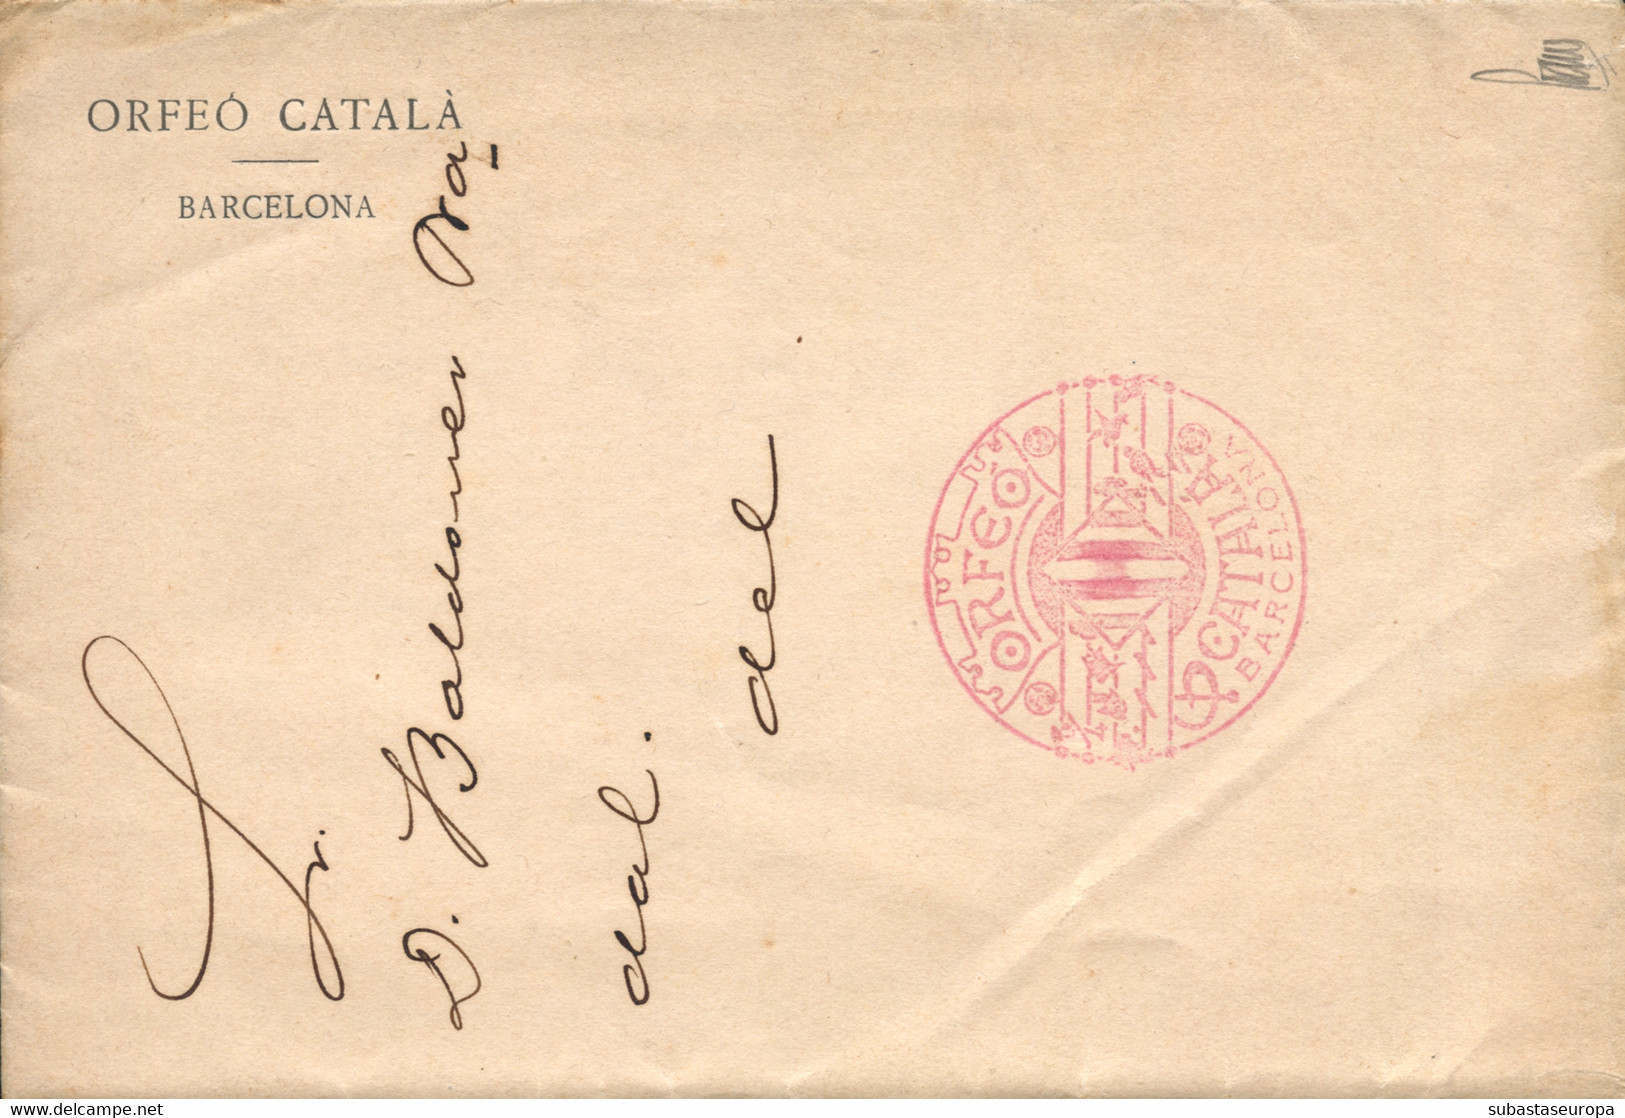 1913 (1 SEP). Carta Circulada Interior De Barcelona, Con Membrete Impreso "Orfeó Català" Y Franquicia En Rojo "ORFEO/CAT - Vrijstelling Van Portkosten